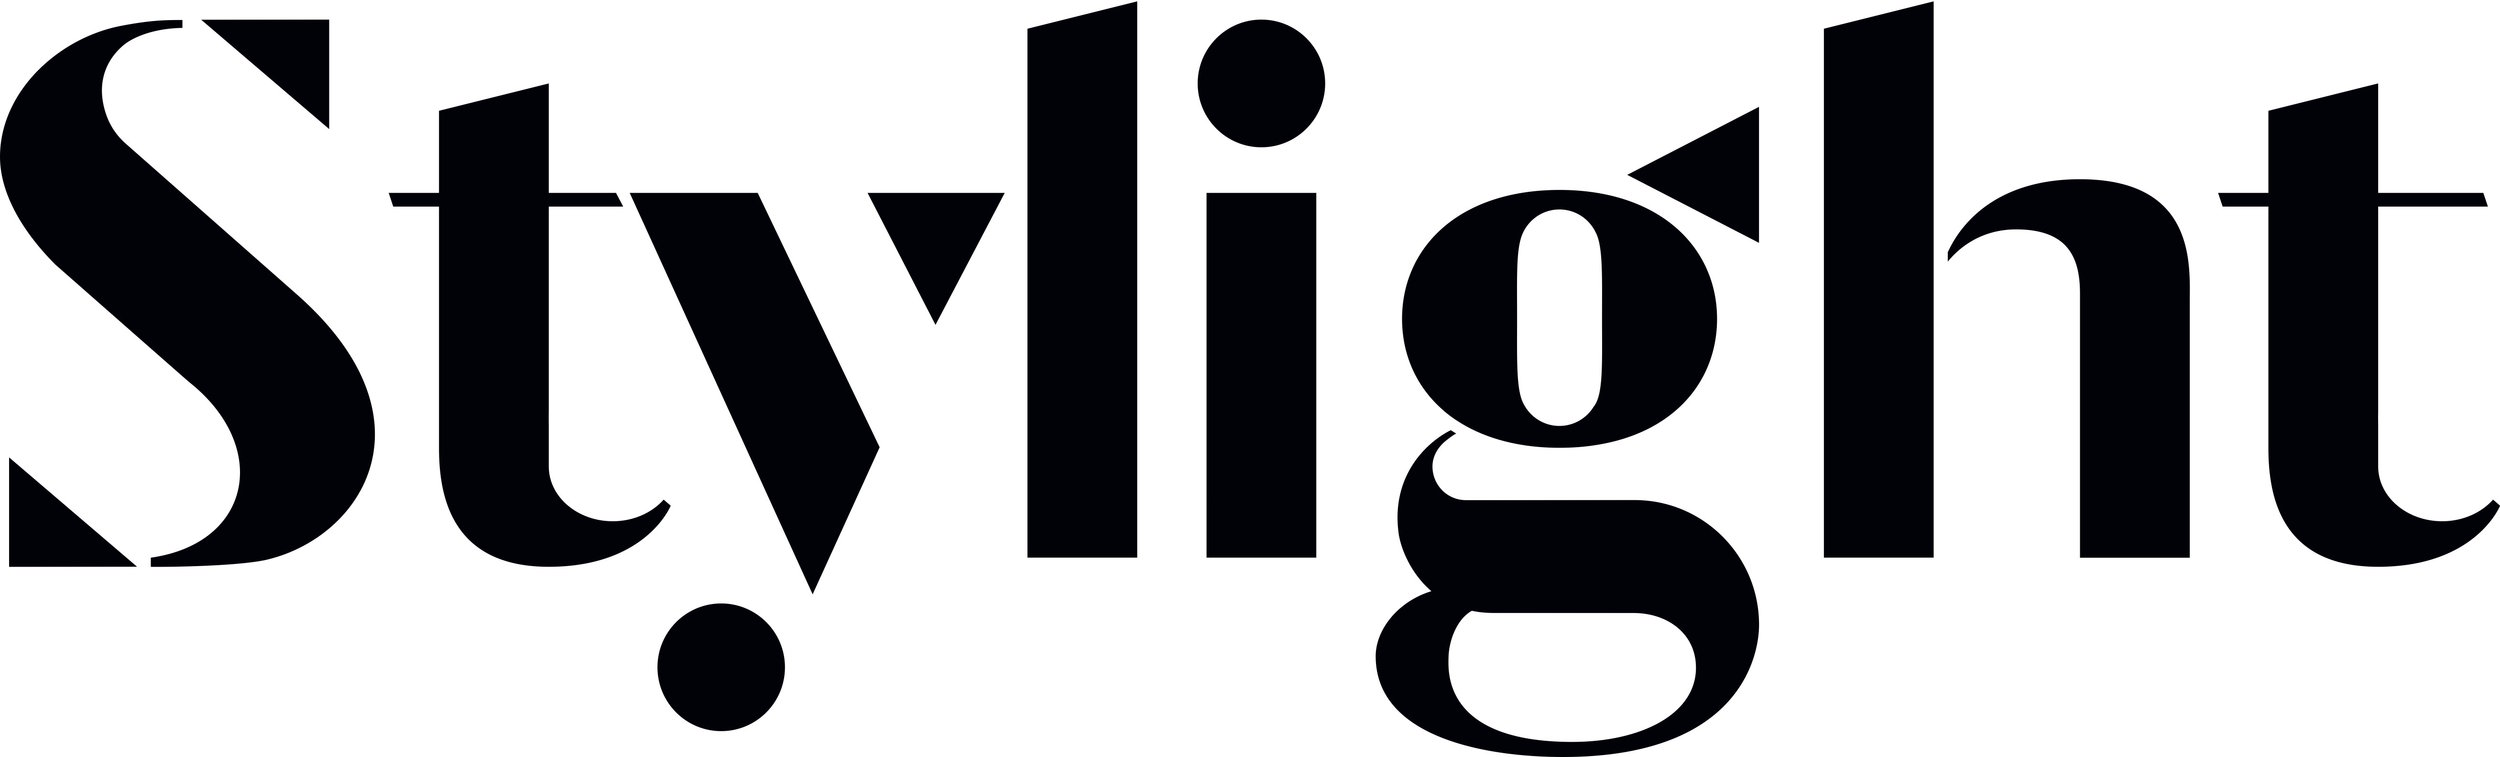 Stylight-Logo.jpg